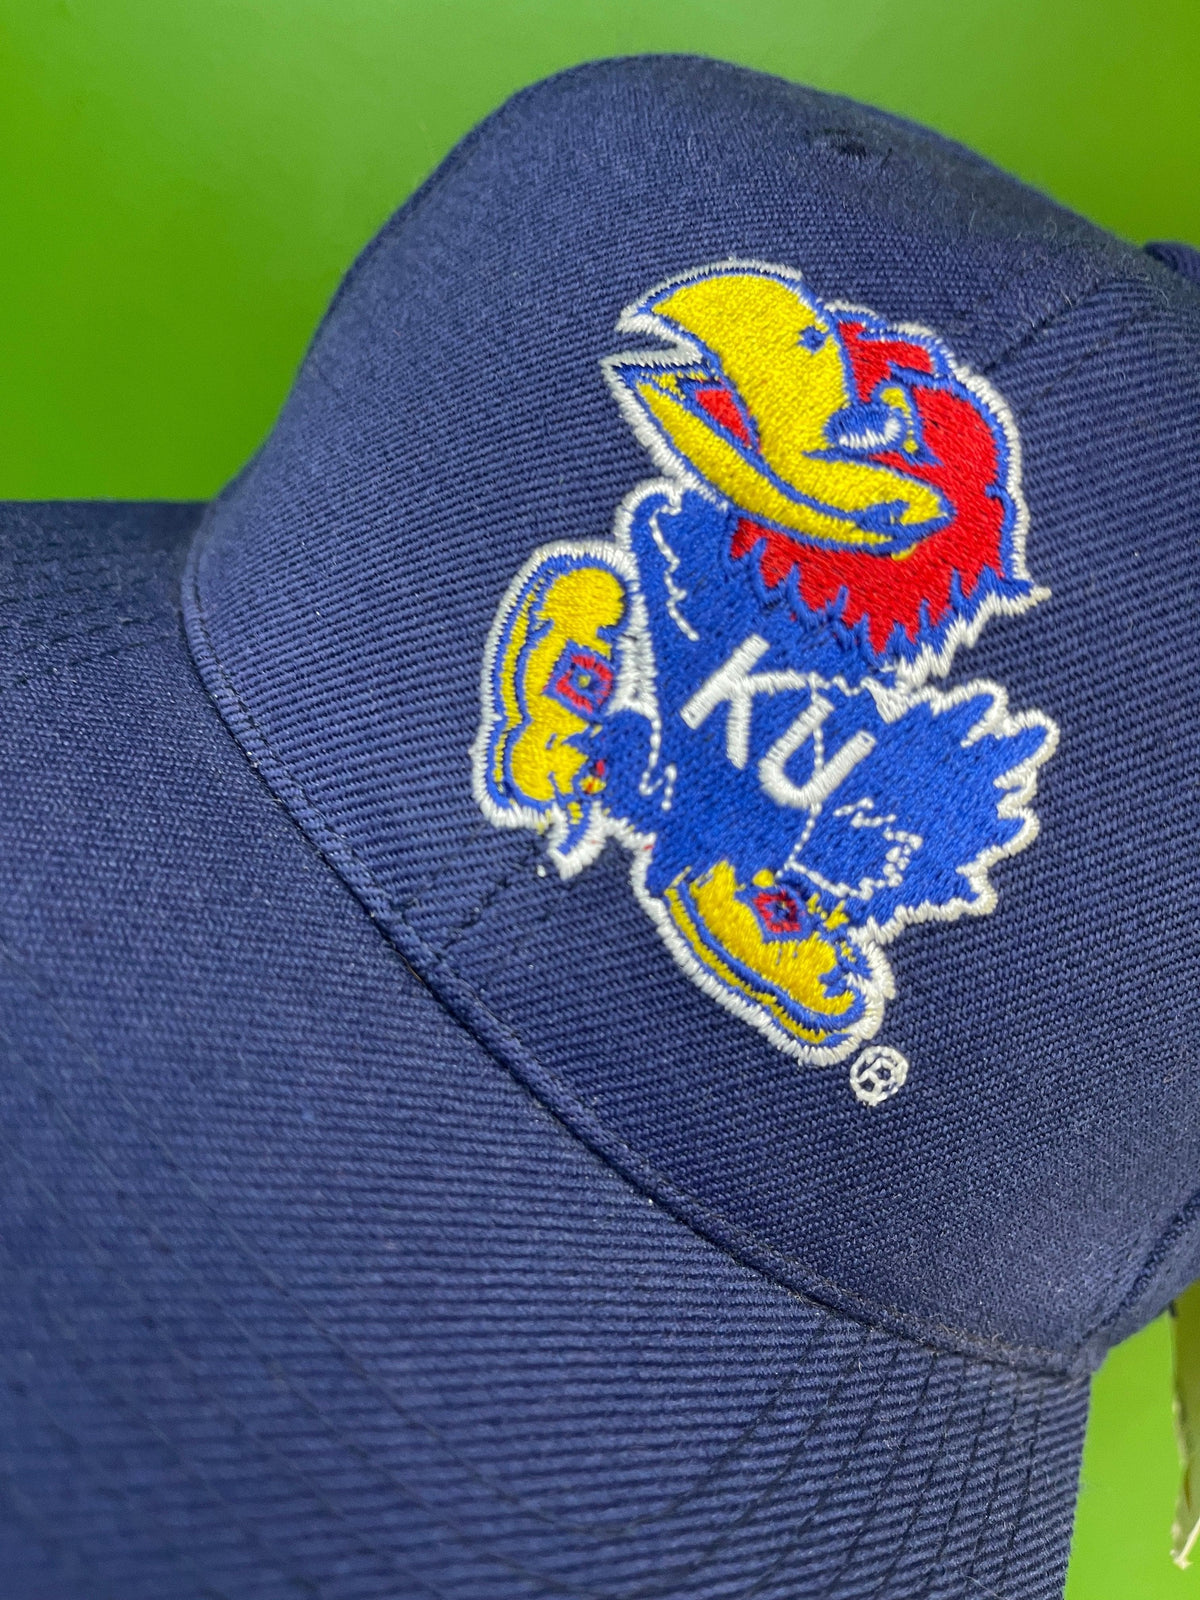 NCAA Kansas Jayhawks Wool Blend Baseball Cap Hat Fitted Size 7-1/4 NWT